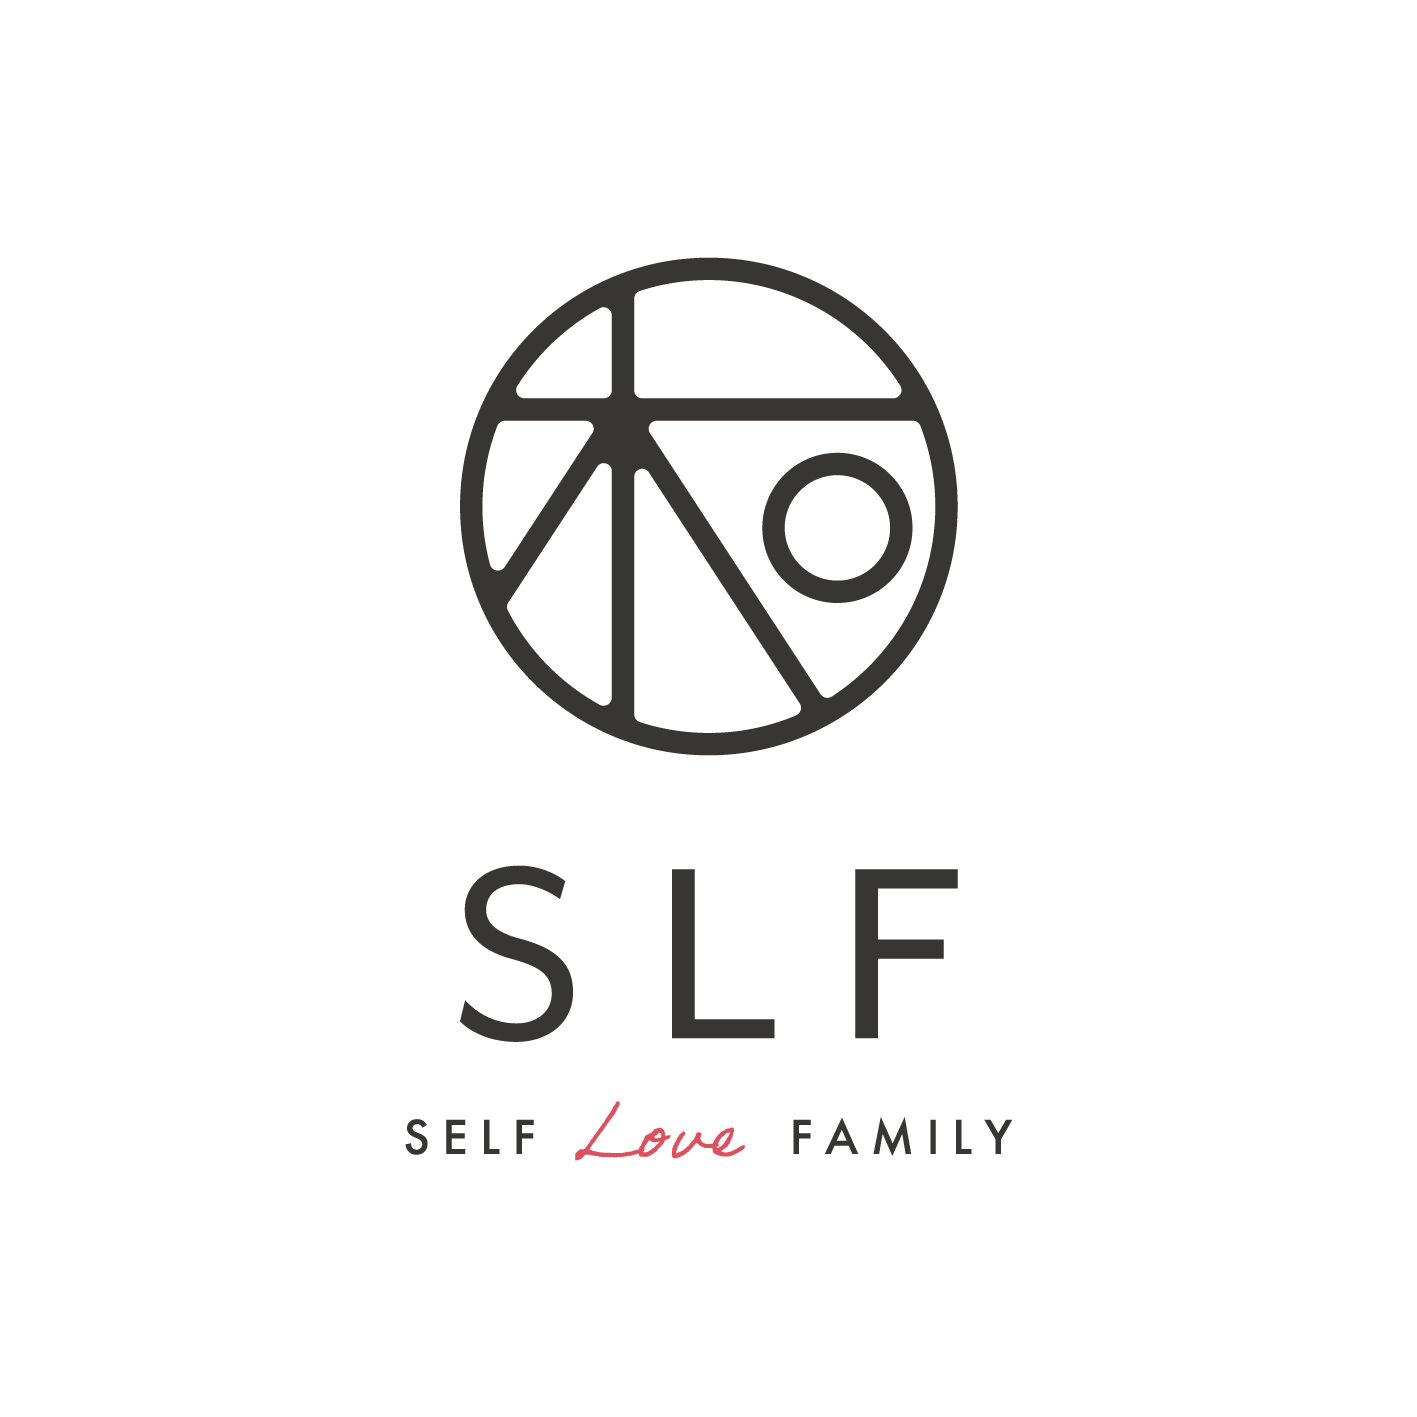 SELF LOVE FAMILY